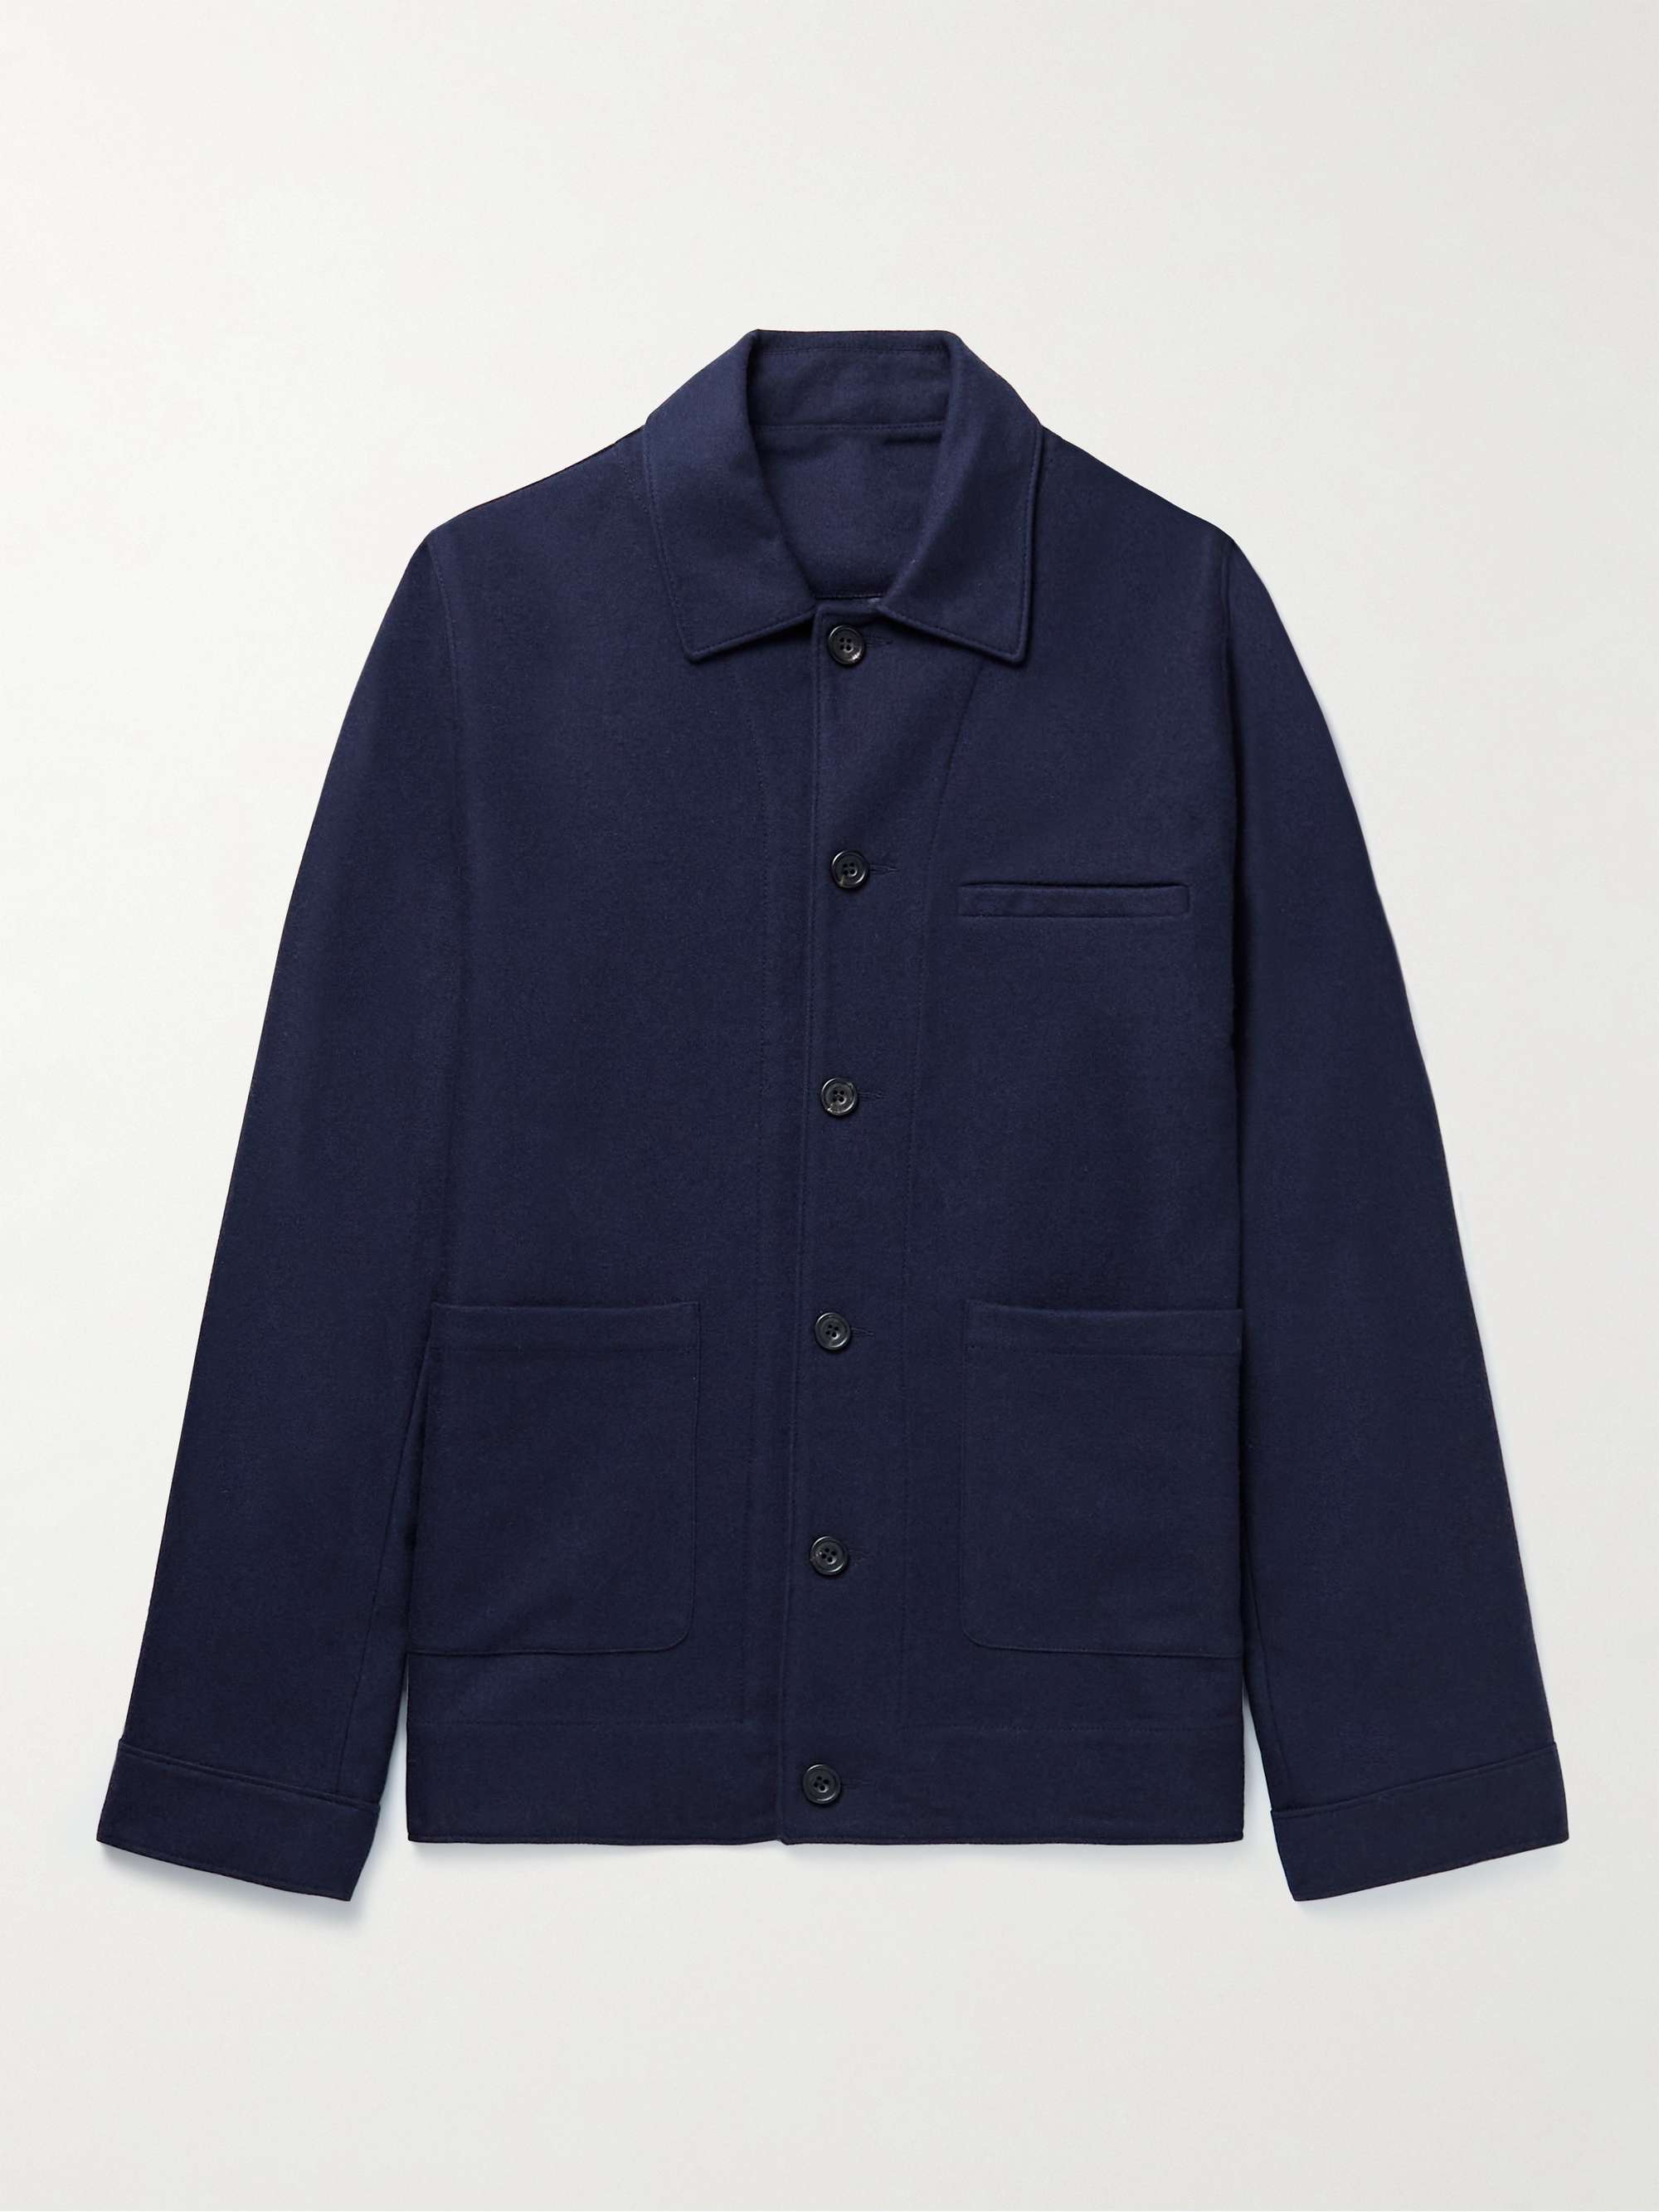 Navy Double-Faced Wool-Flannel Shirt Jacket | RICHARD JAMES | MR PORTER